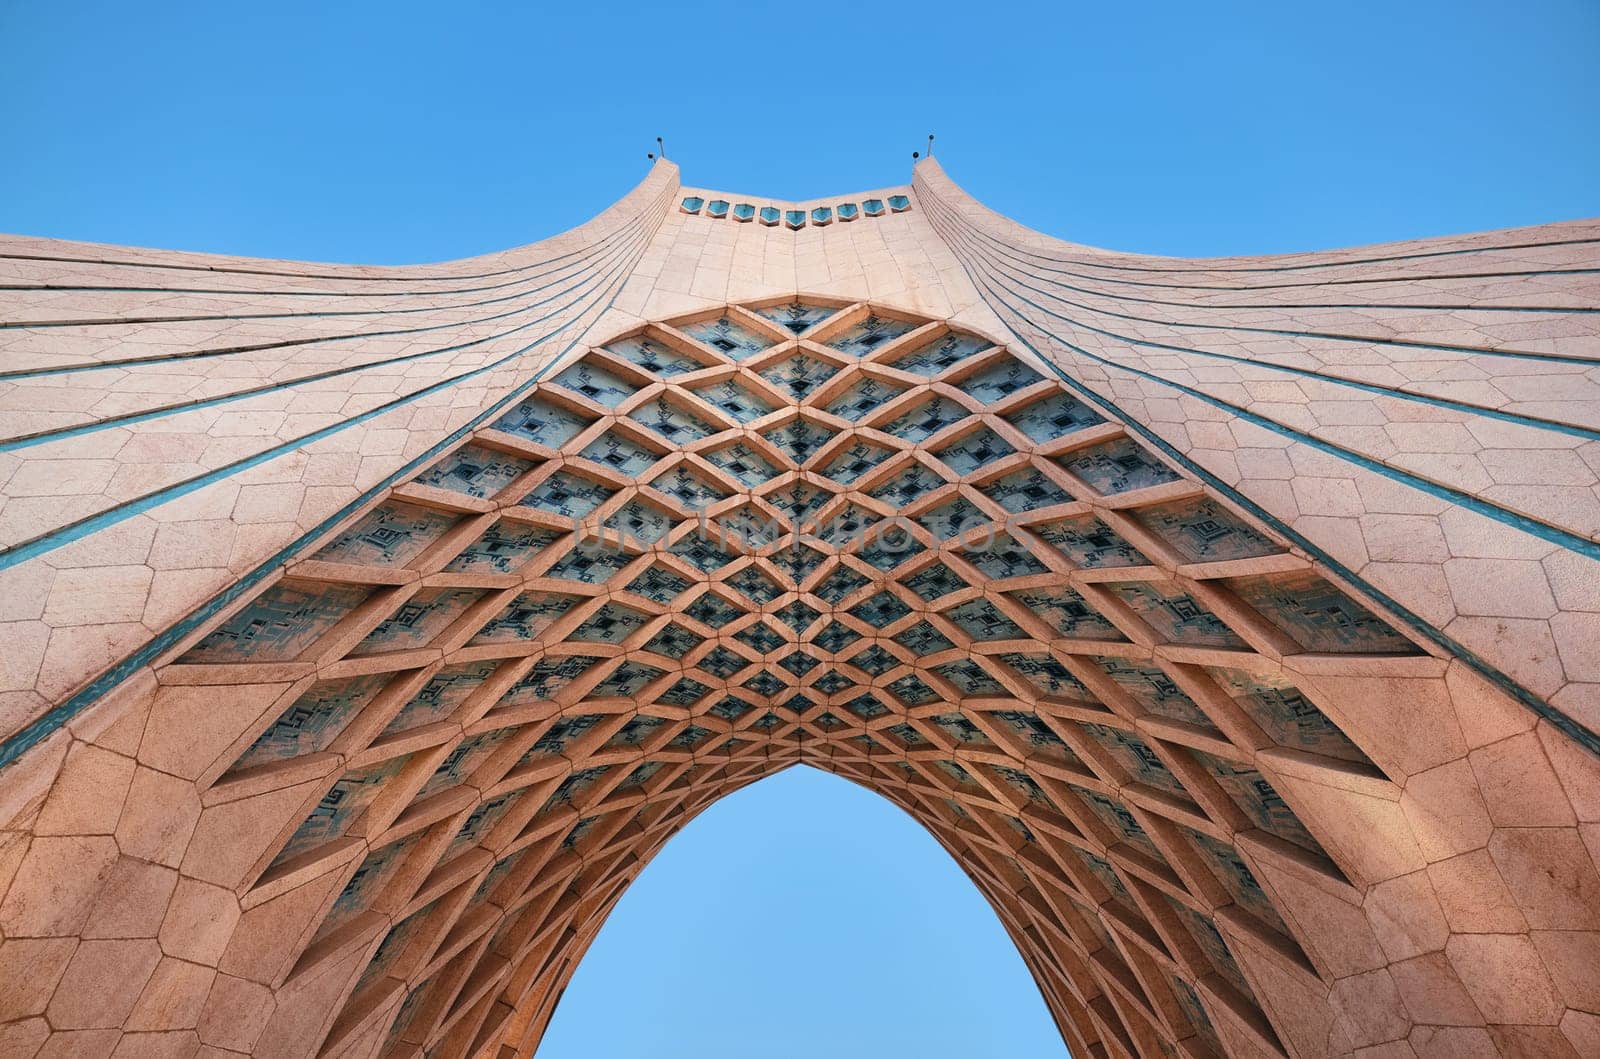 Azadi Tower is a symbol of freedom in Iran, the main symbol of Iran's capital. MS ZI LA Azadi Tower - Freedom Tower, the gateway to Tehran, Popular tourist point. 02.12.22 Tehran, Iran by EvgeniyQW